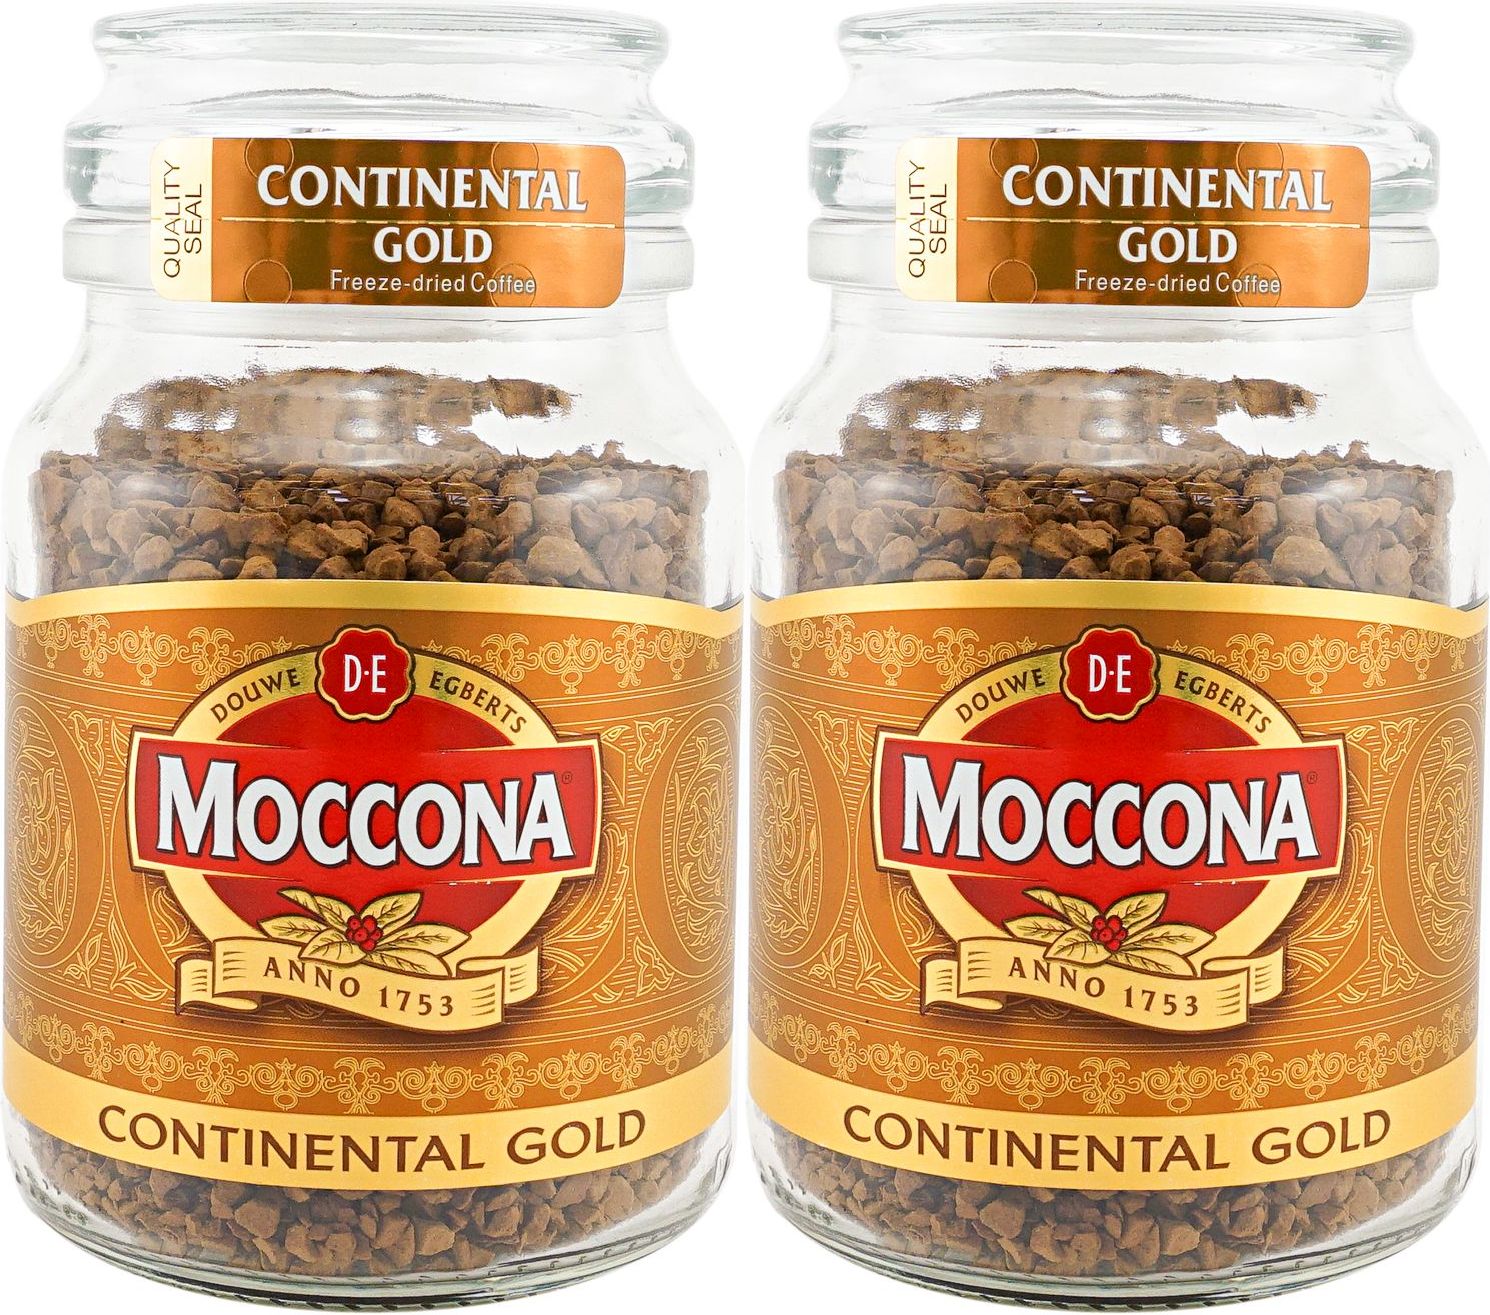 Moccona continental gold